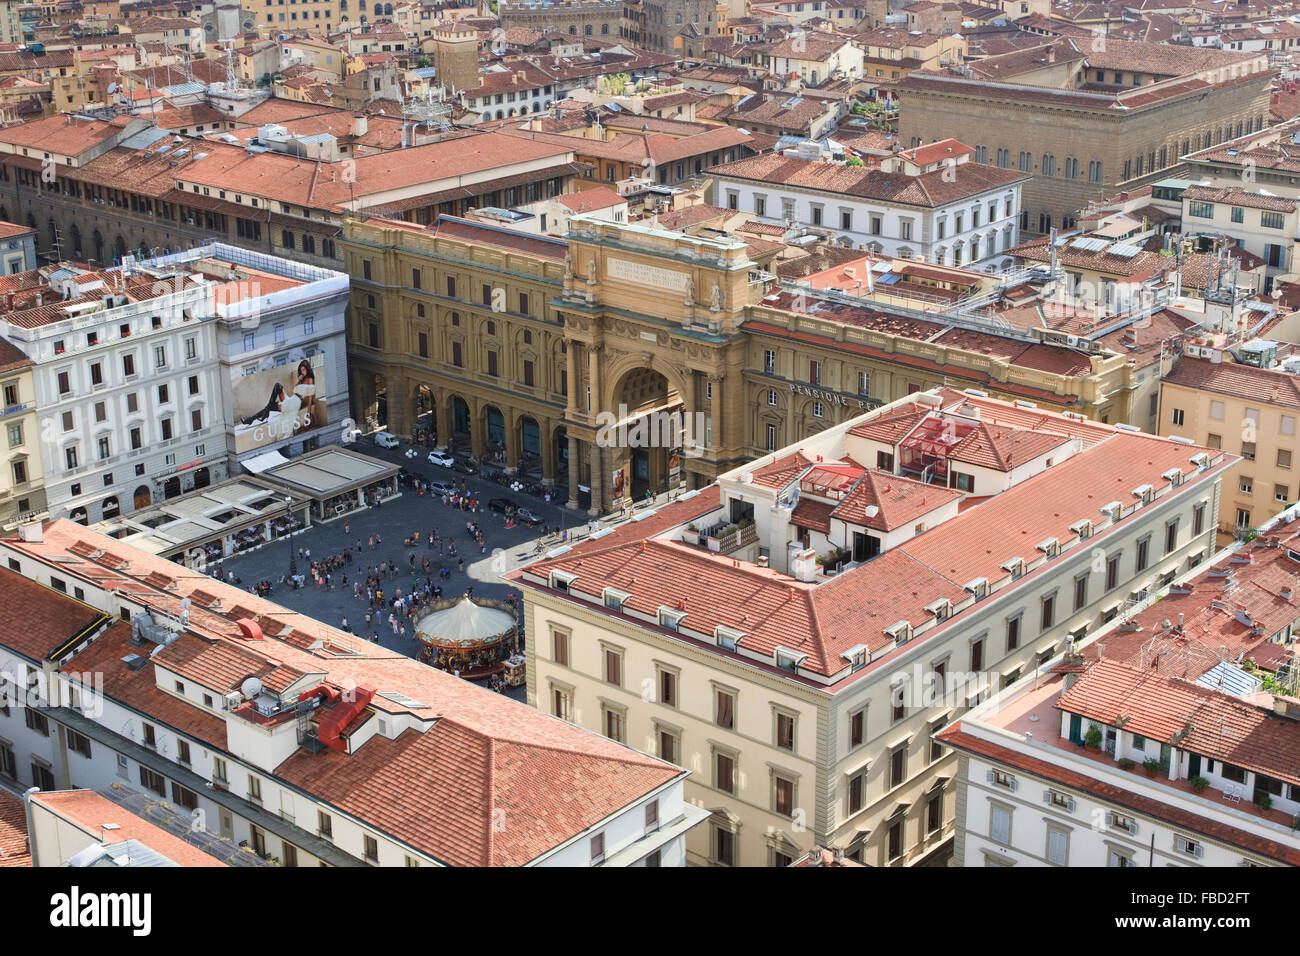 Vue depuis le haut de campanile de Giotto, Florence, Italie, en regardant vers la Piazza della Repubblica. Banque D'Images